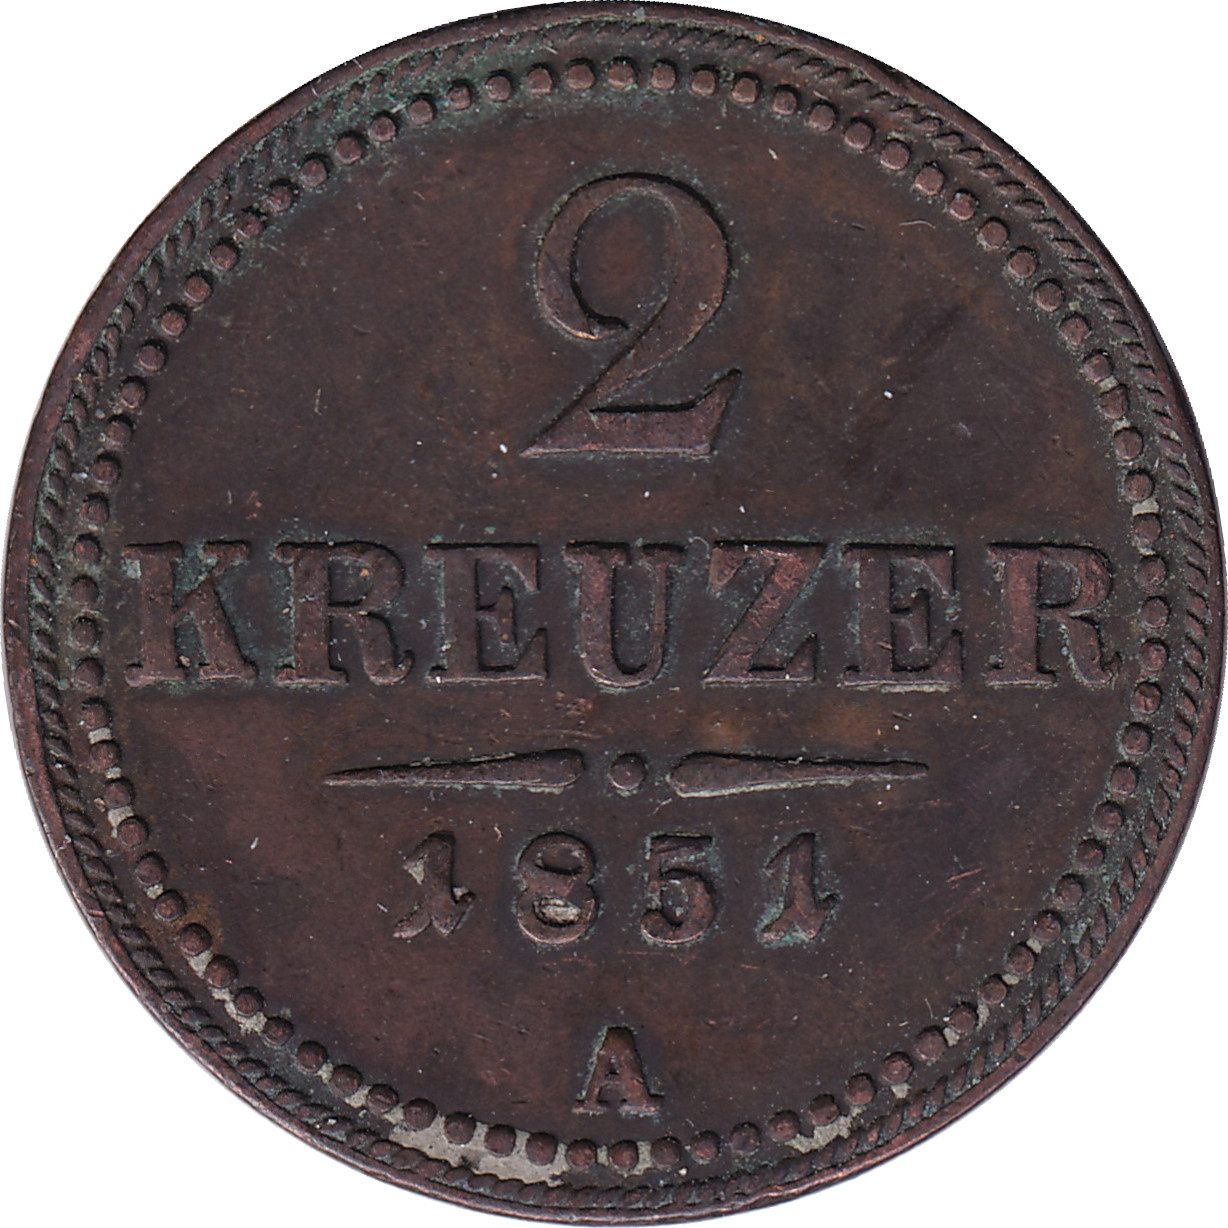 2 kreuzer - Franz Jospeh I - Double-headed Eagle